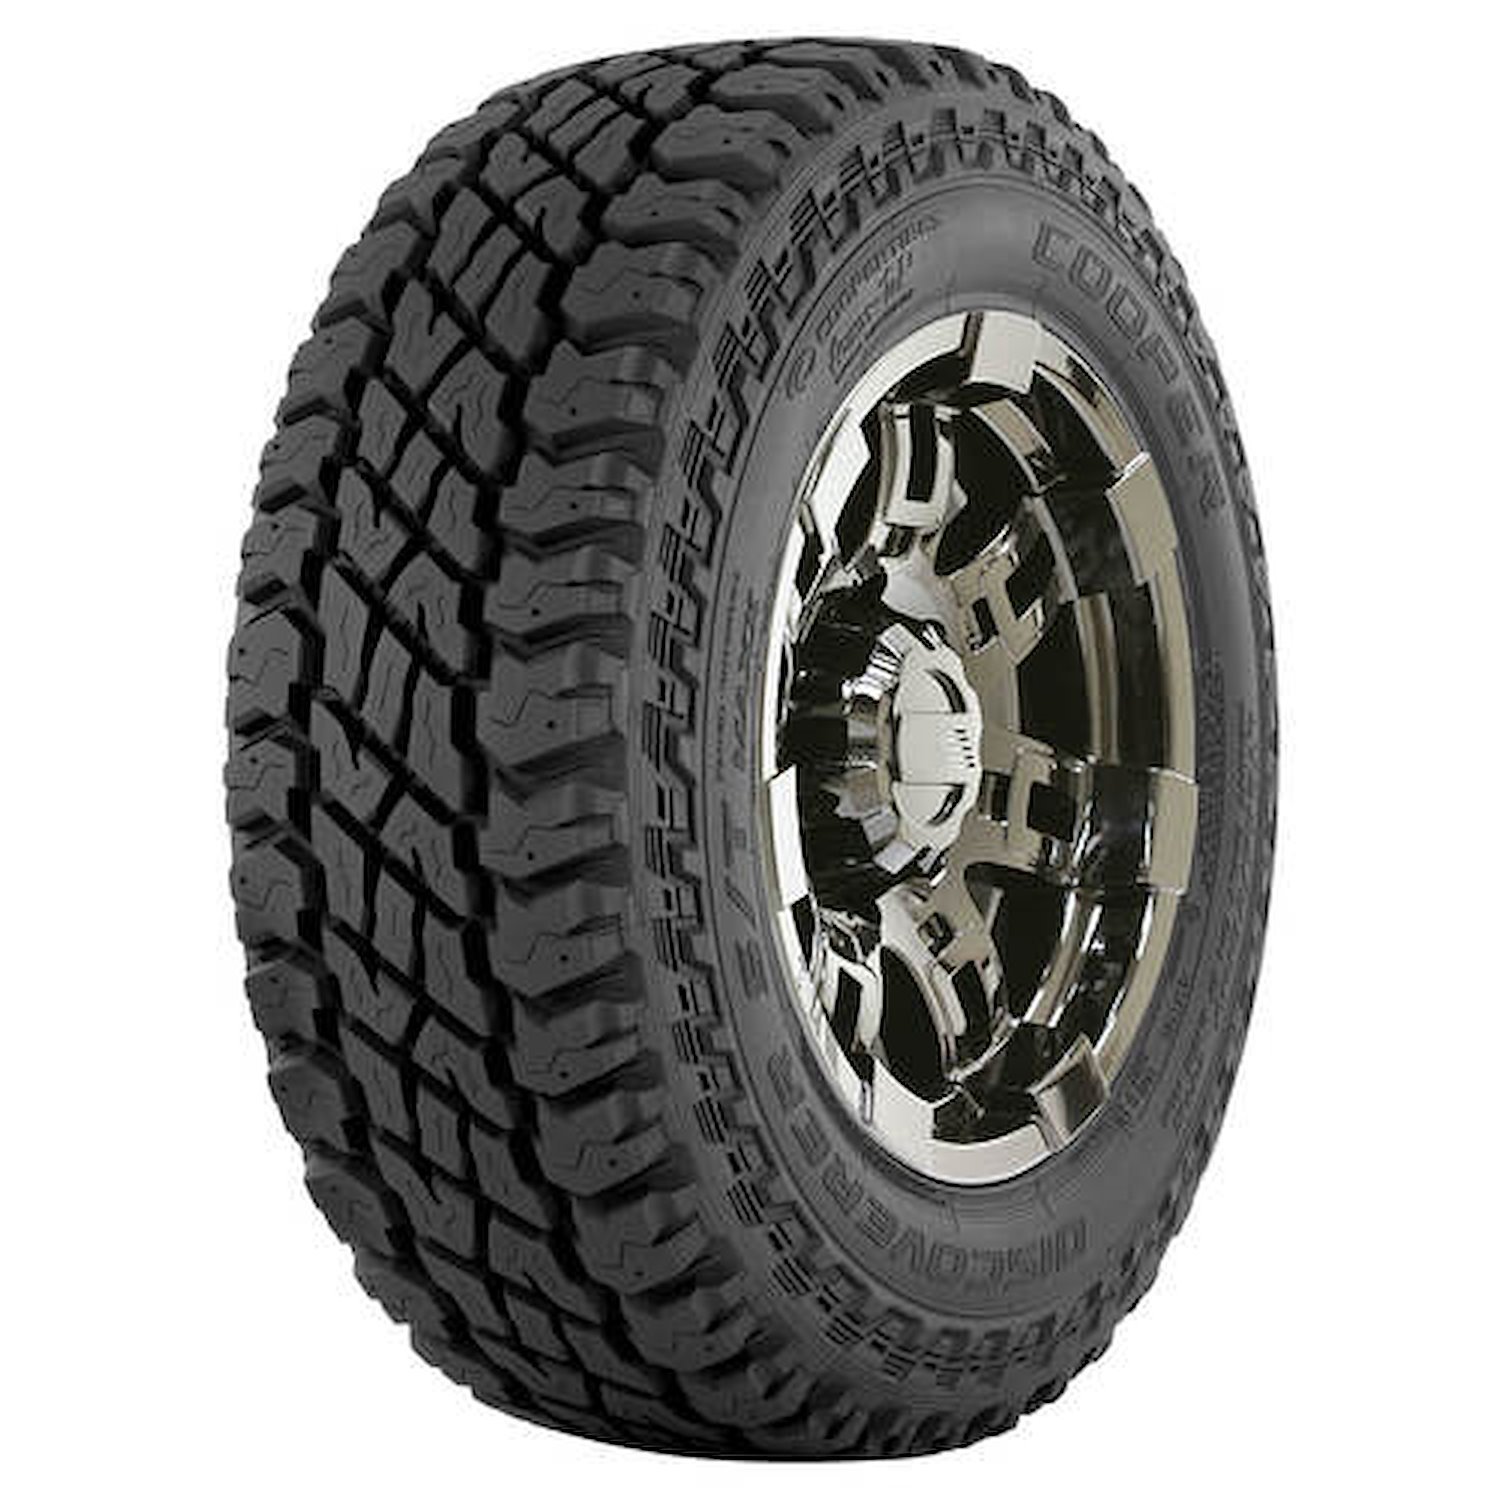 Discoverer S/T Maxx All-Terrain Tire, LT275/70R18